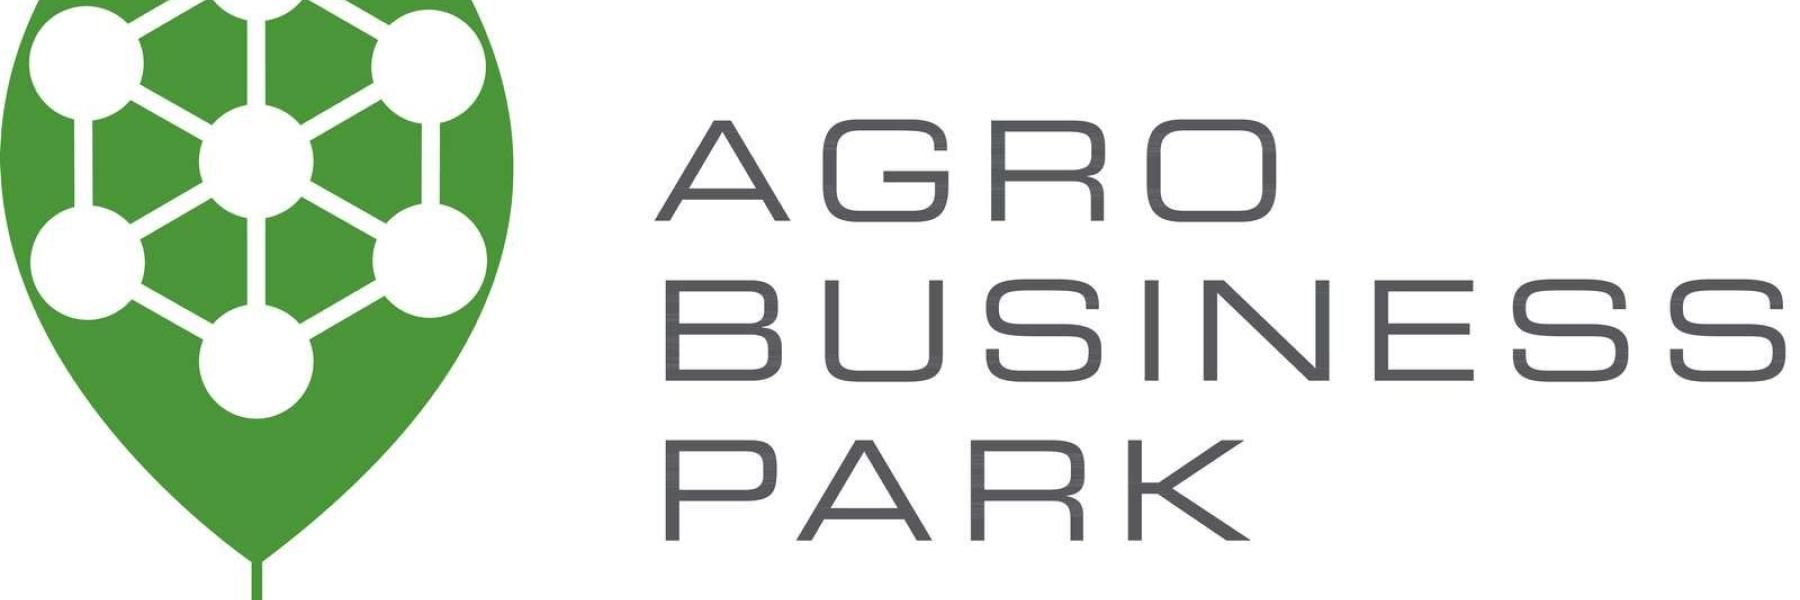 Agro Business Park logo 1600.